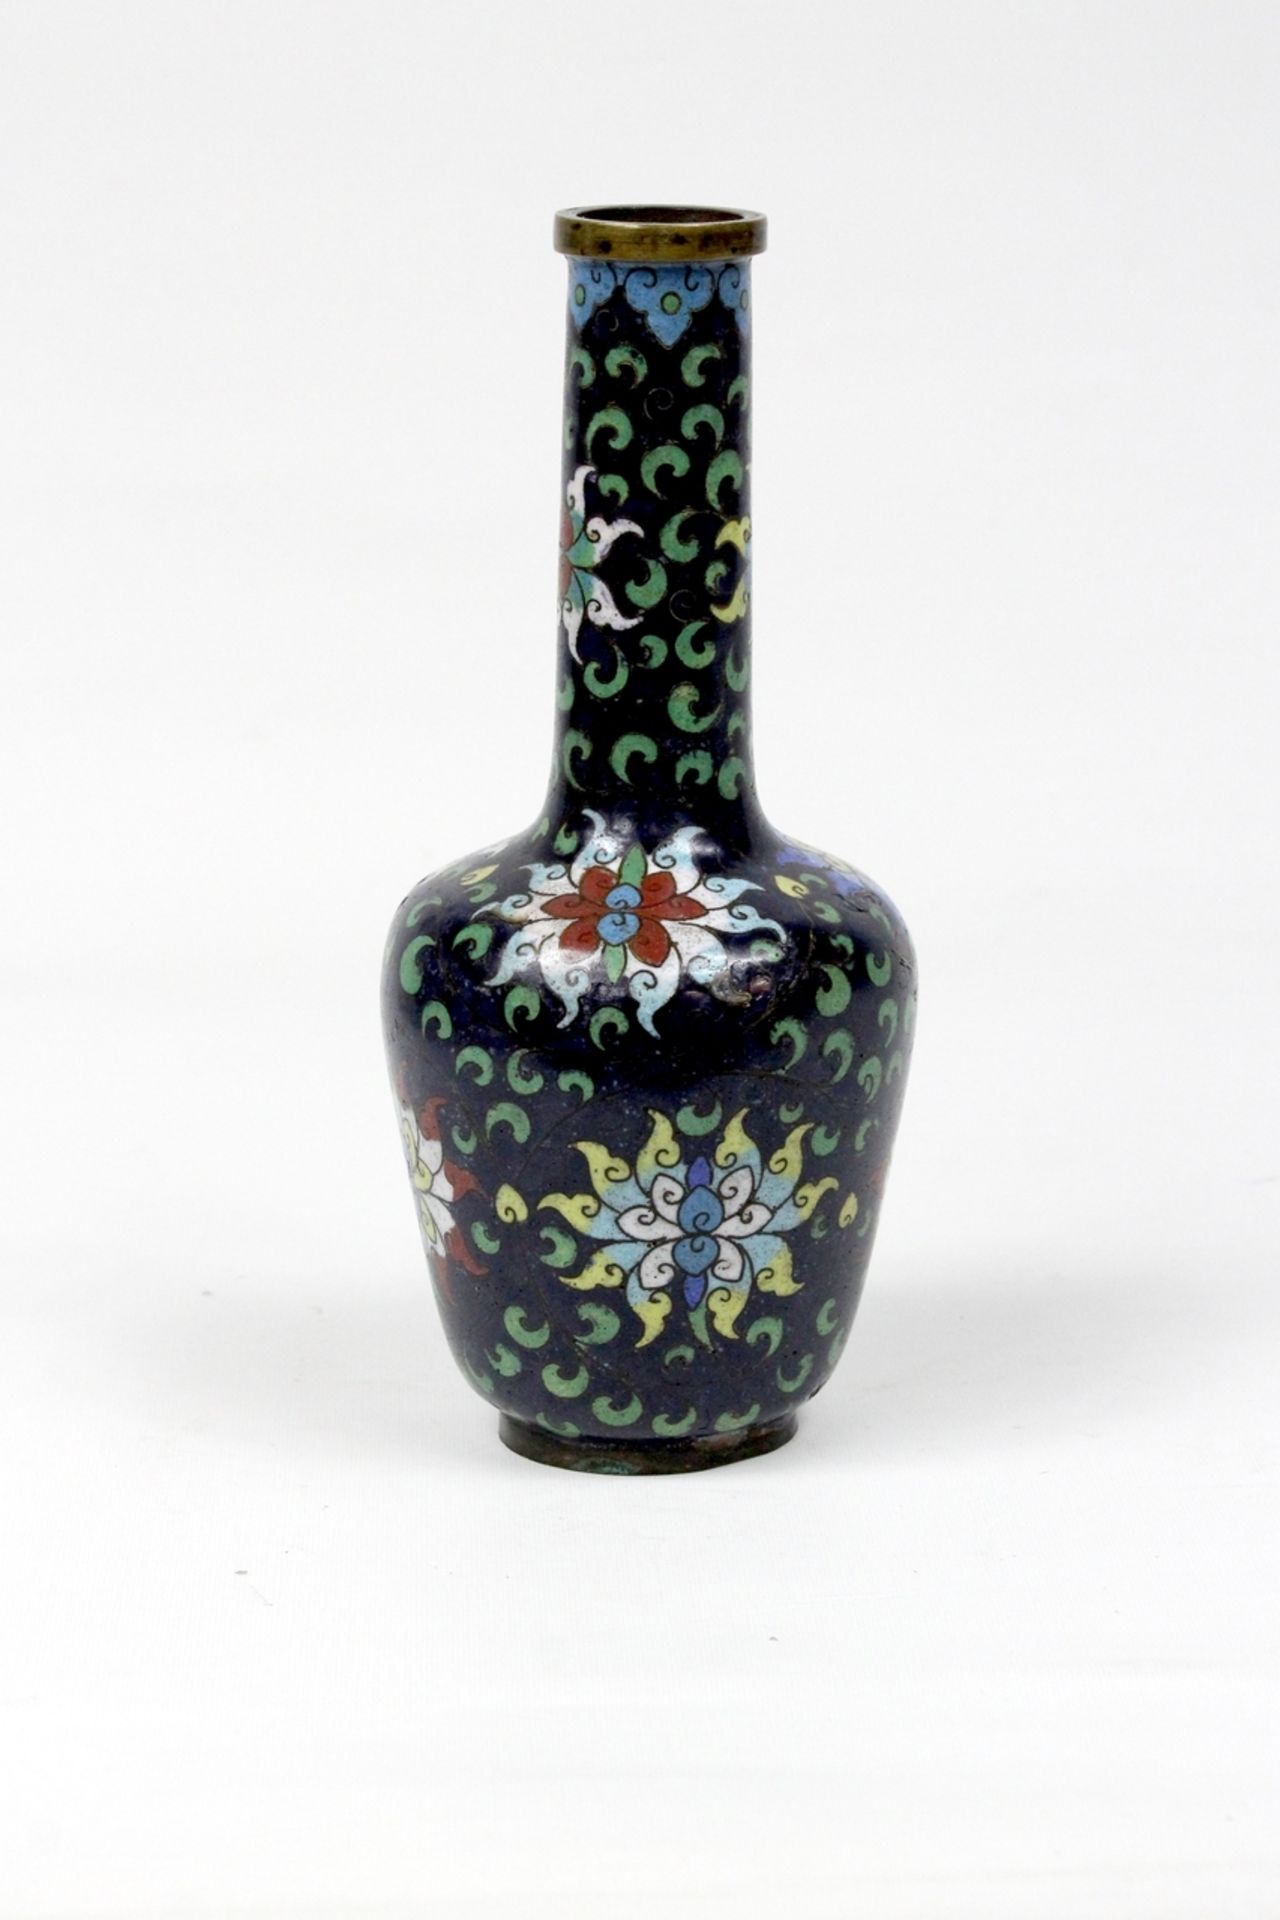 China Blaue Cloisonne-Chrysanthemen Vase frühe Qing Dynastie 17.Jhdt. - Image 2 of 5